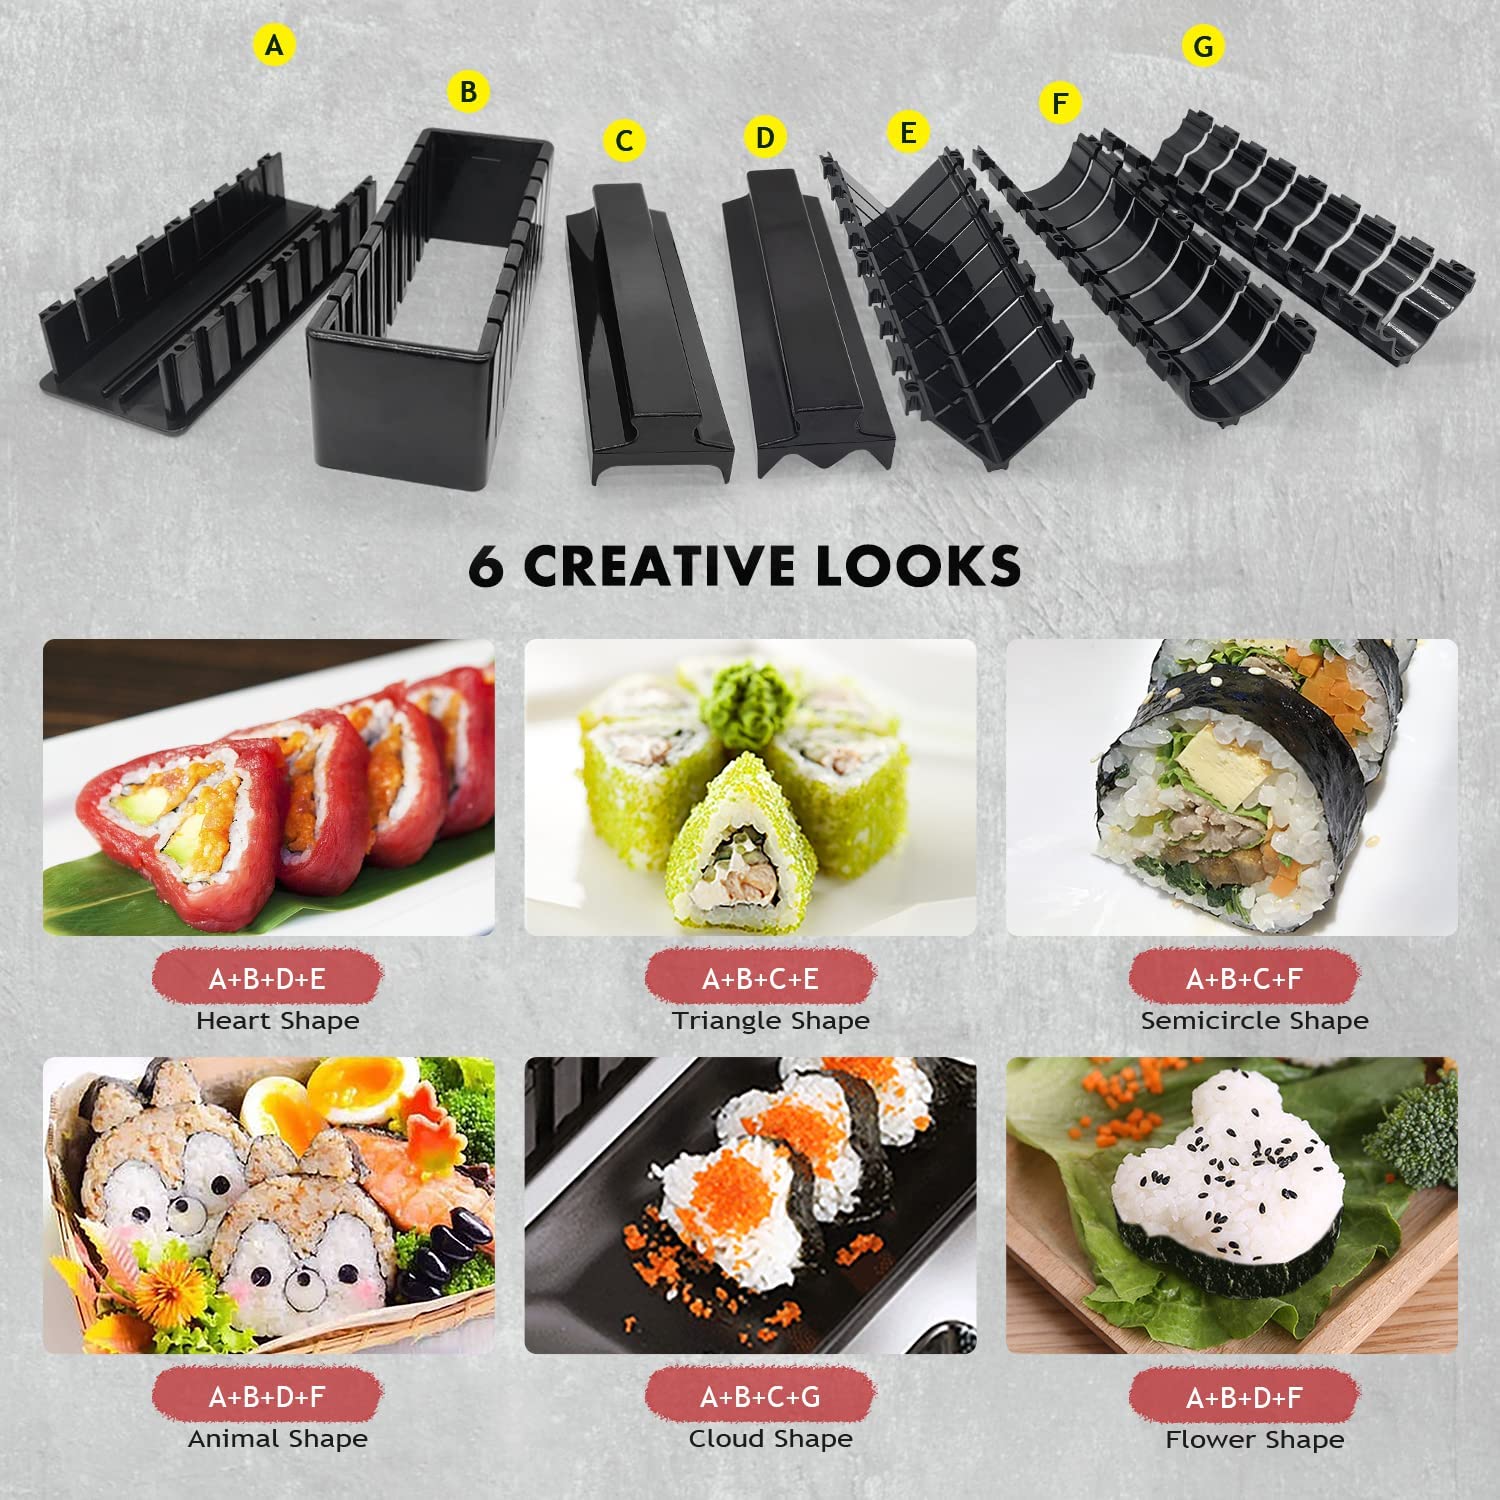 Sushi Maker Kit (21pc) - Little Asia